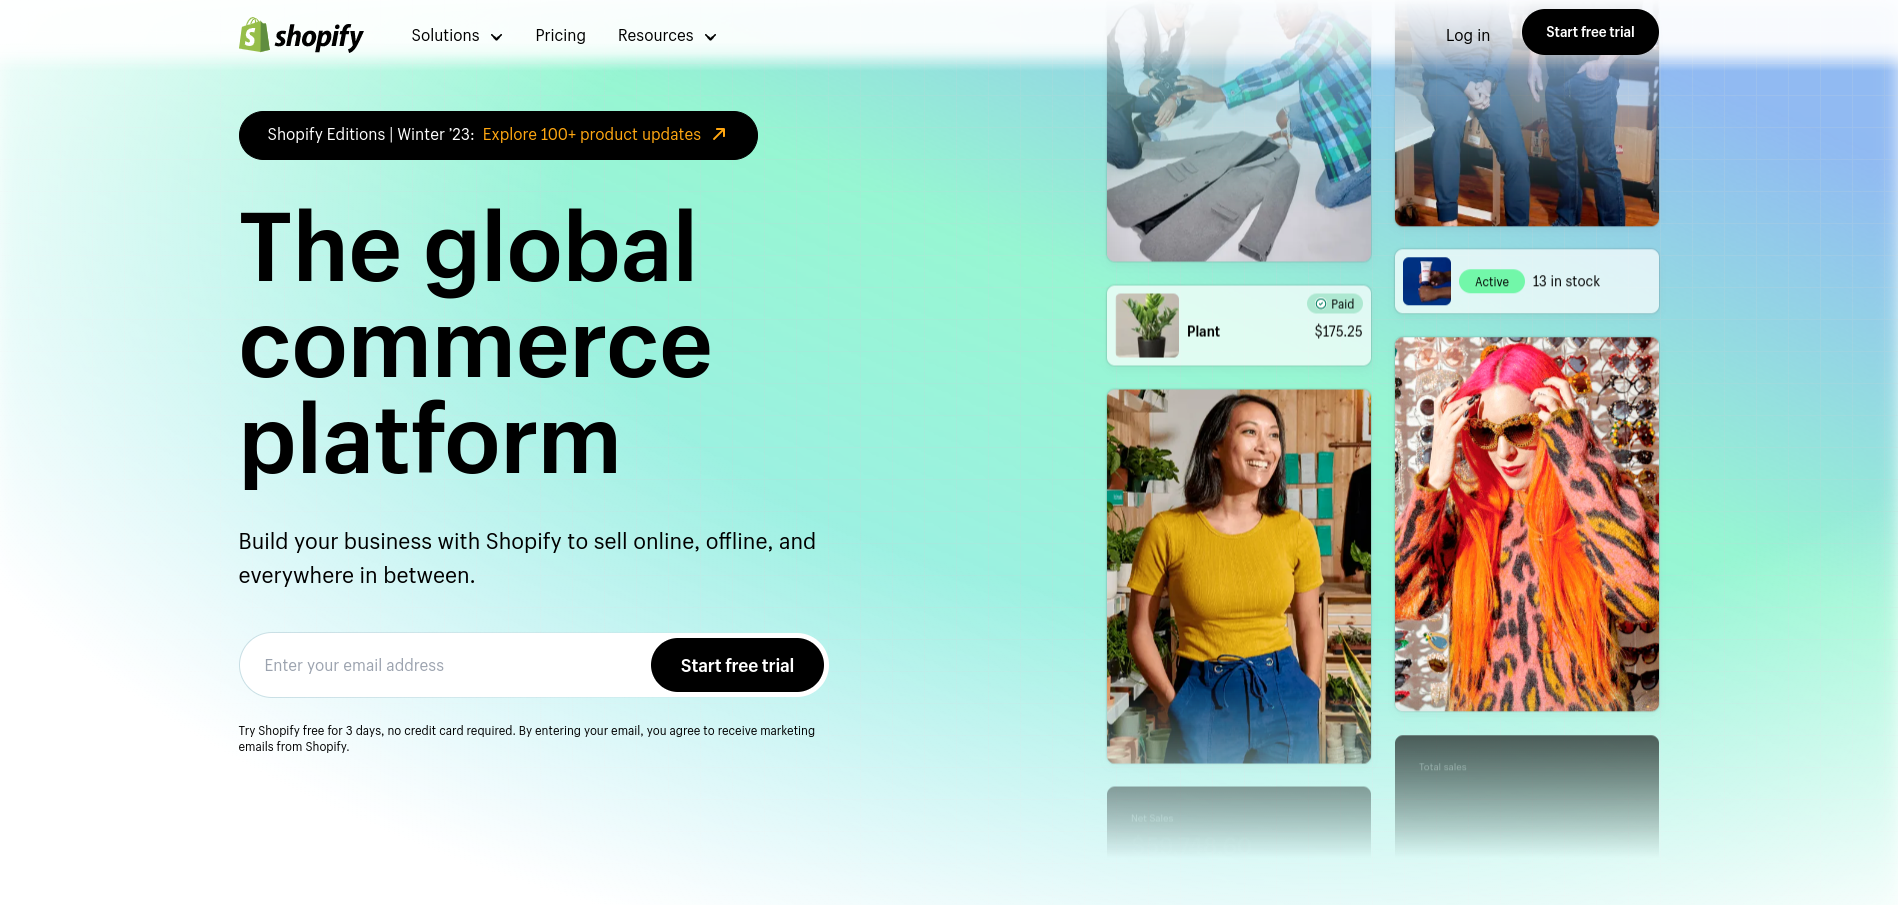 The Shopify eCommerce platform